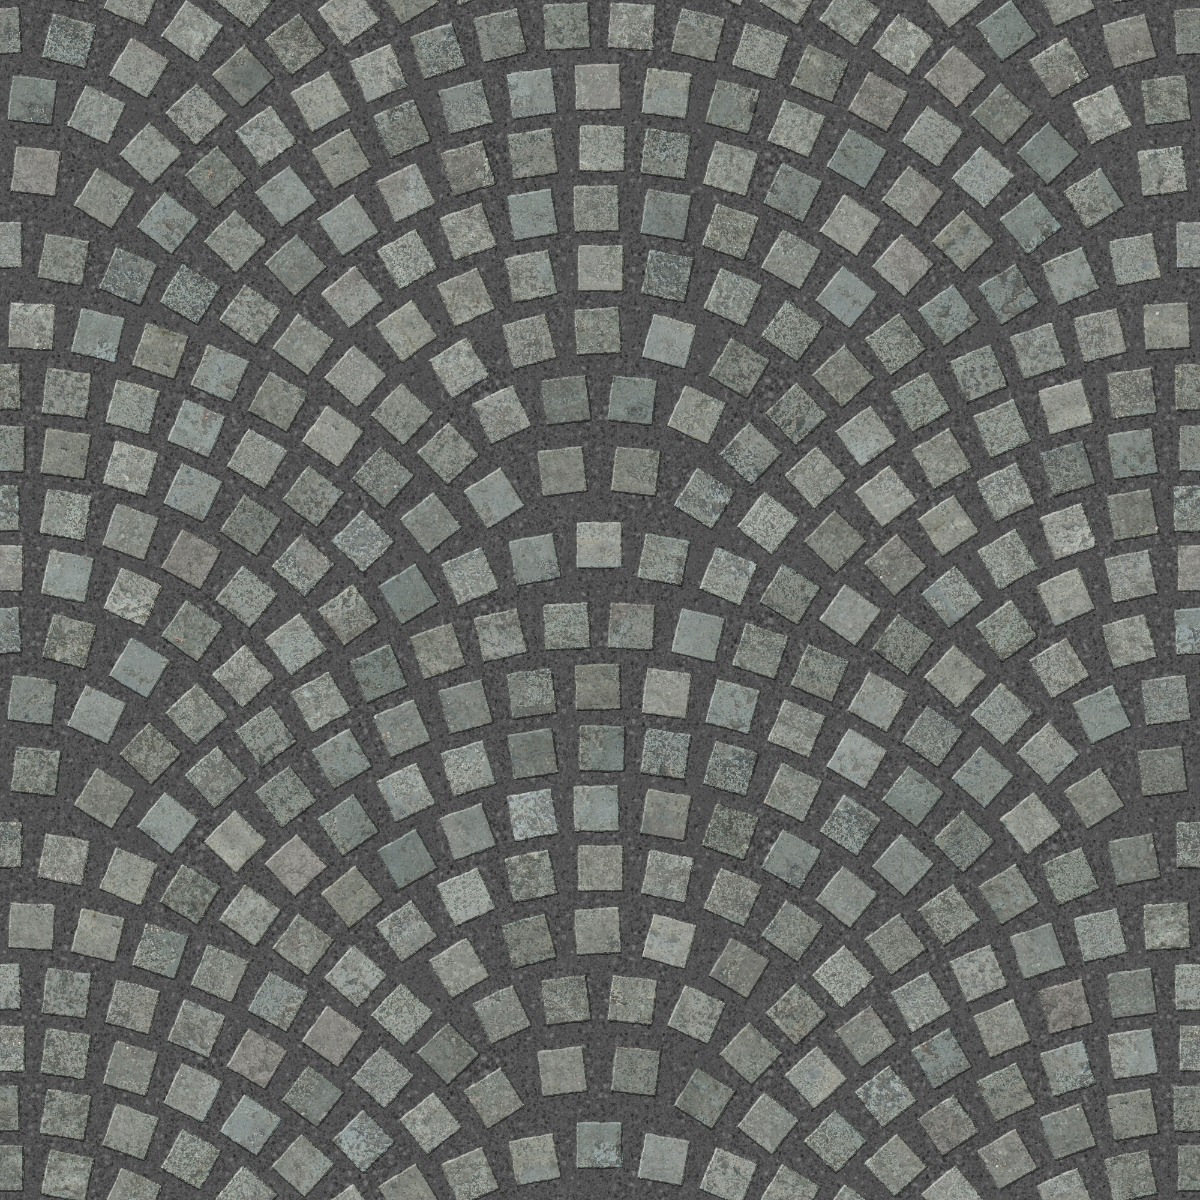 A seamless stone texture with flagstone blocks arranged in a European Fan pattern